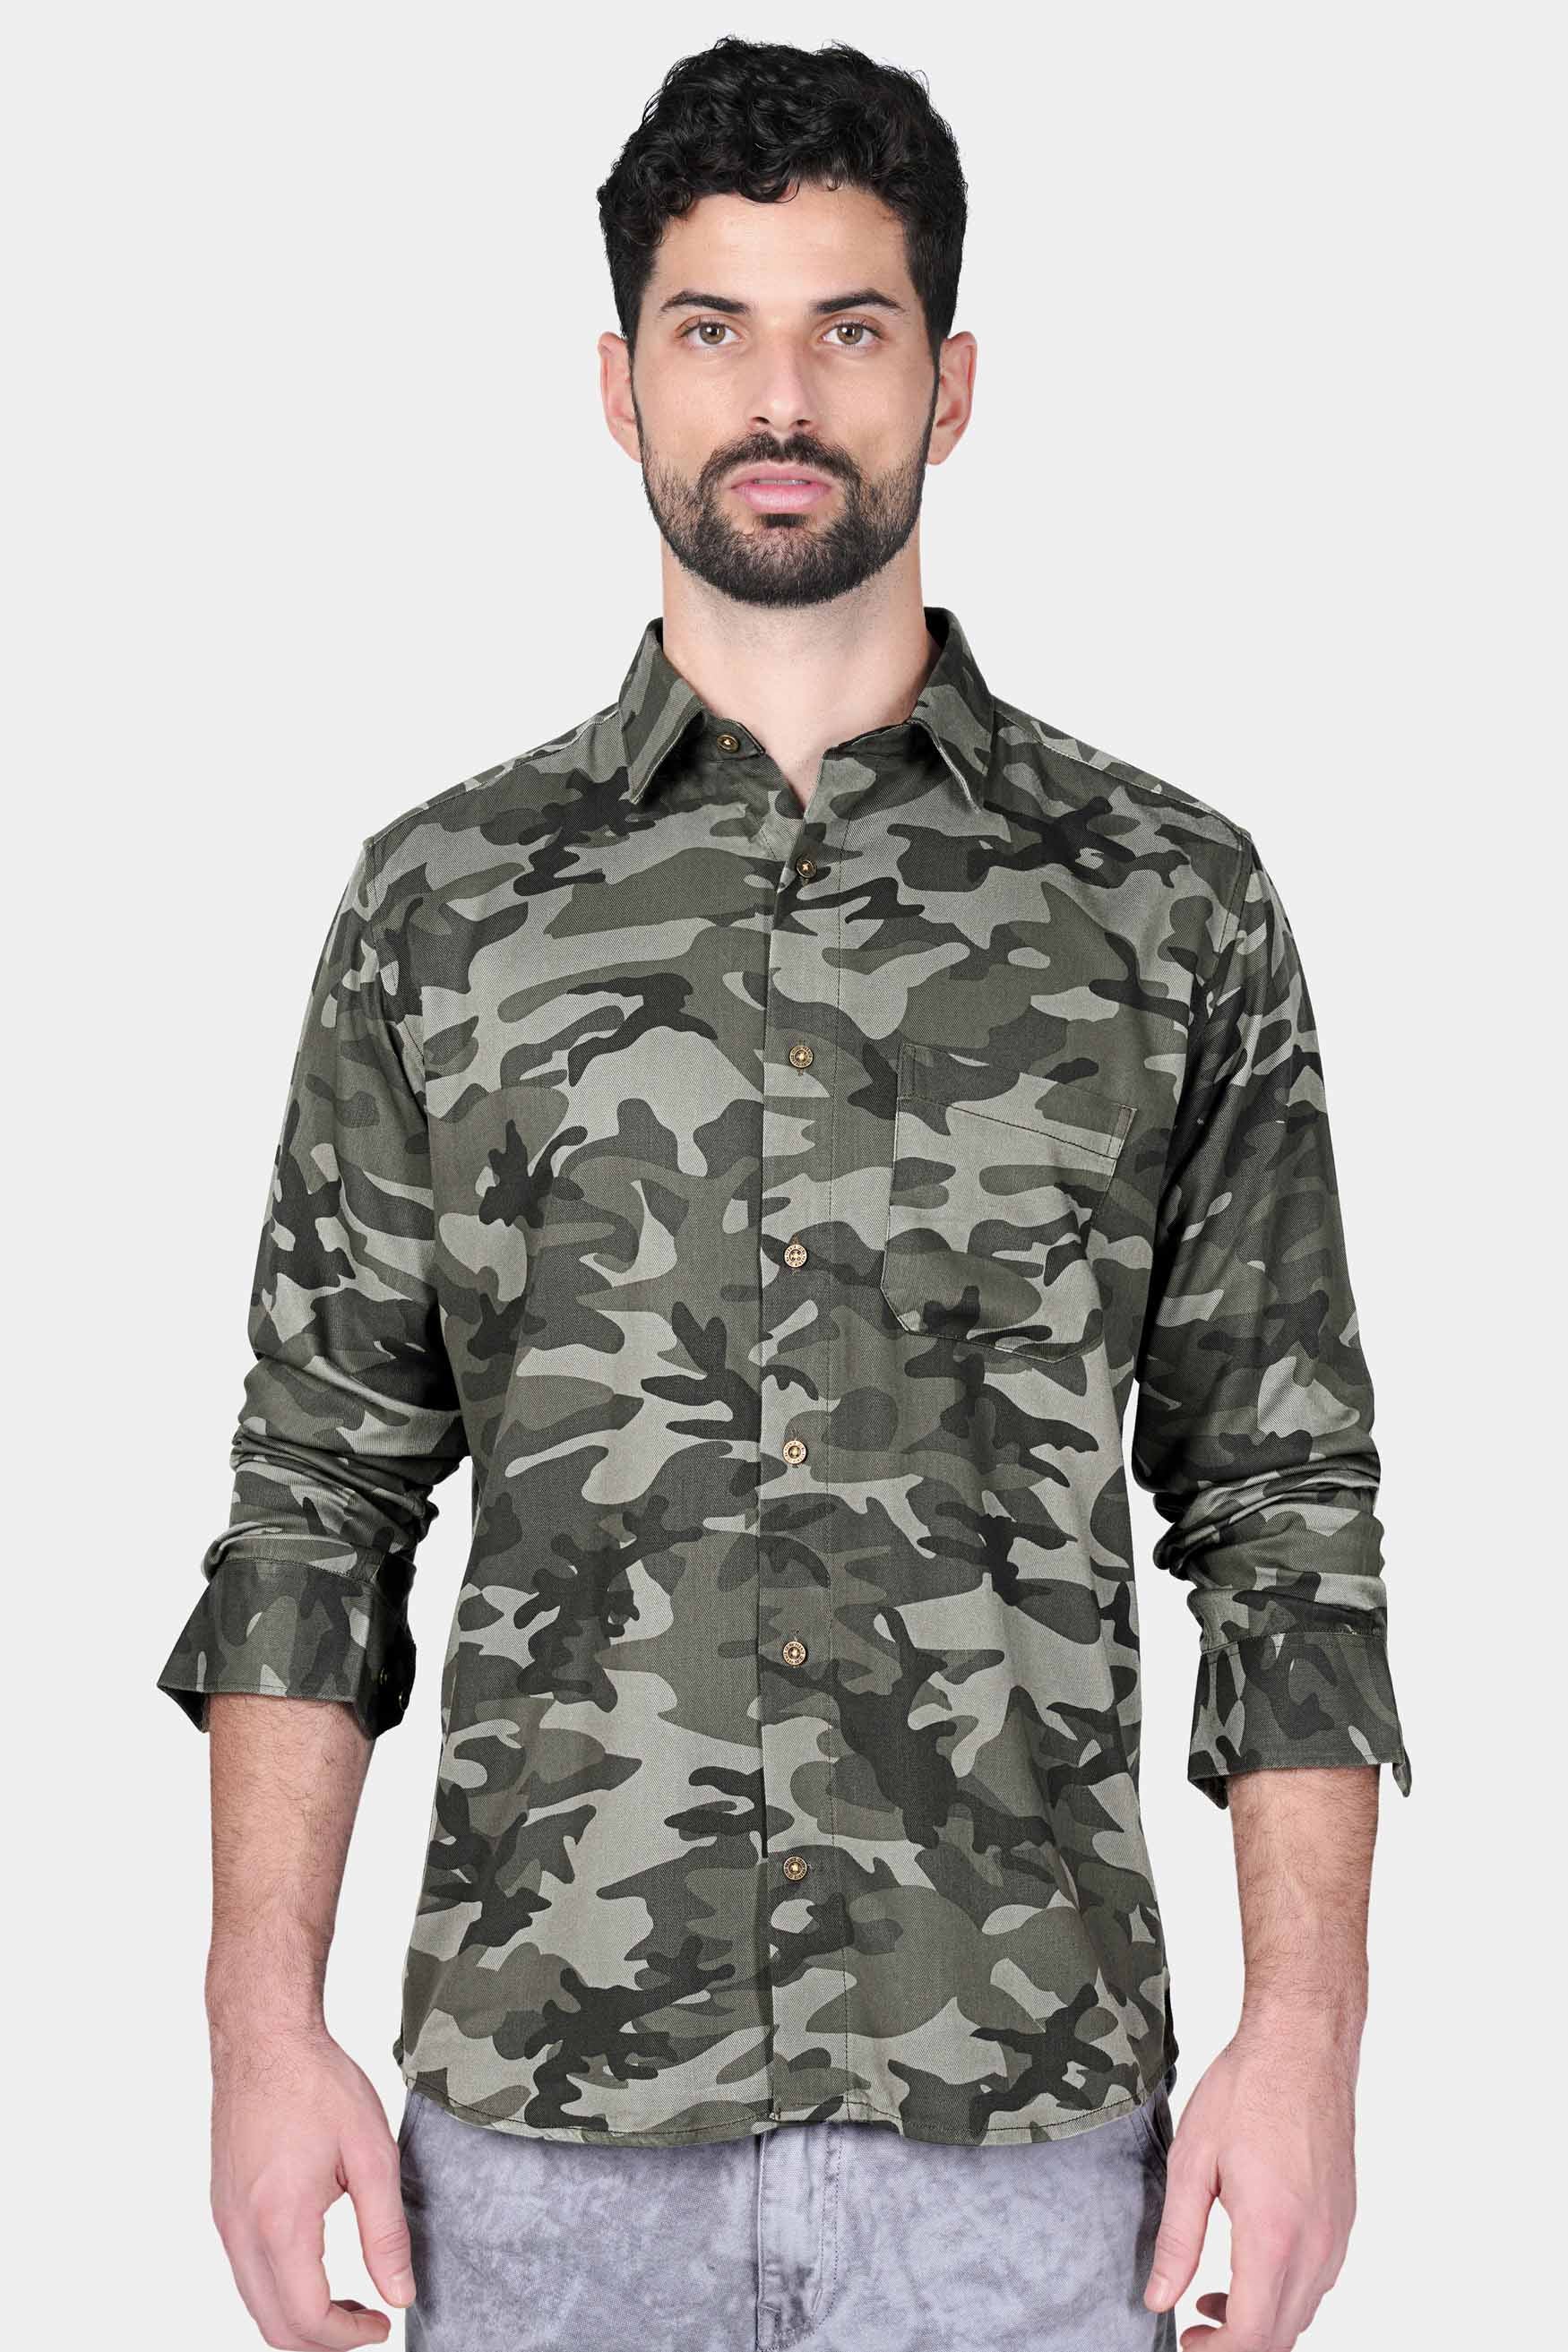 Gunmetal Gray with Black and White Camouflage Printed Premium Tencel  Designer Shirt